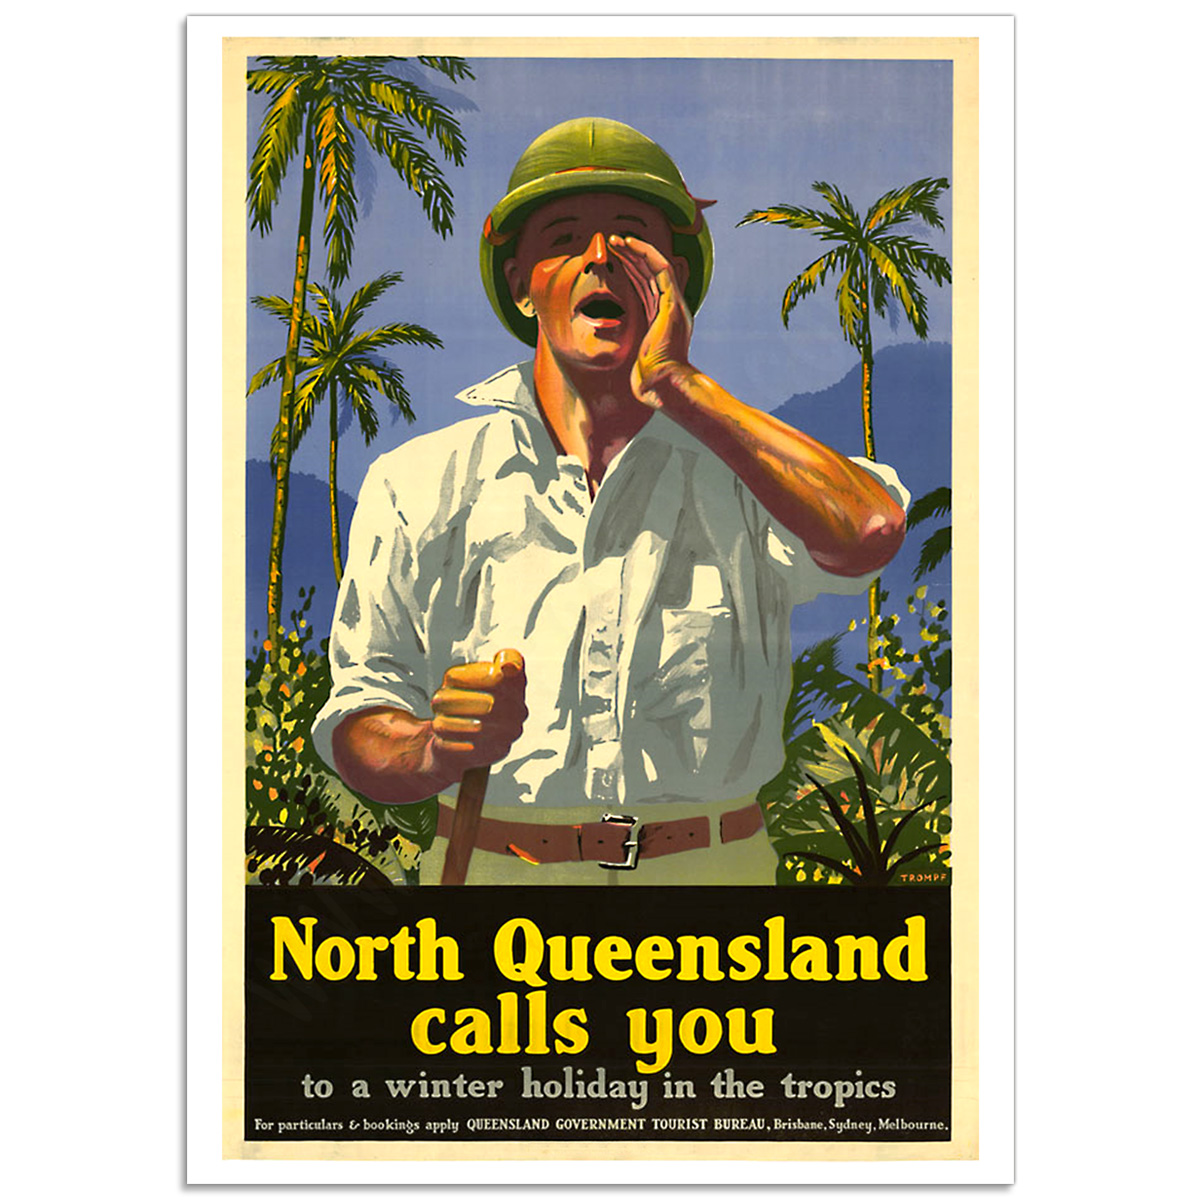 Vintage Travel Poster - North Queensland Calls You